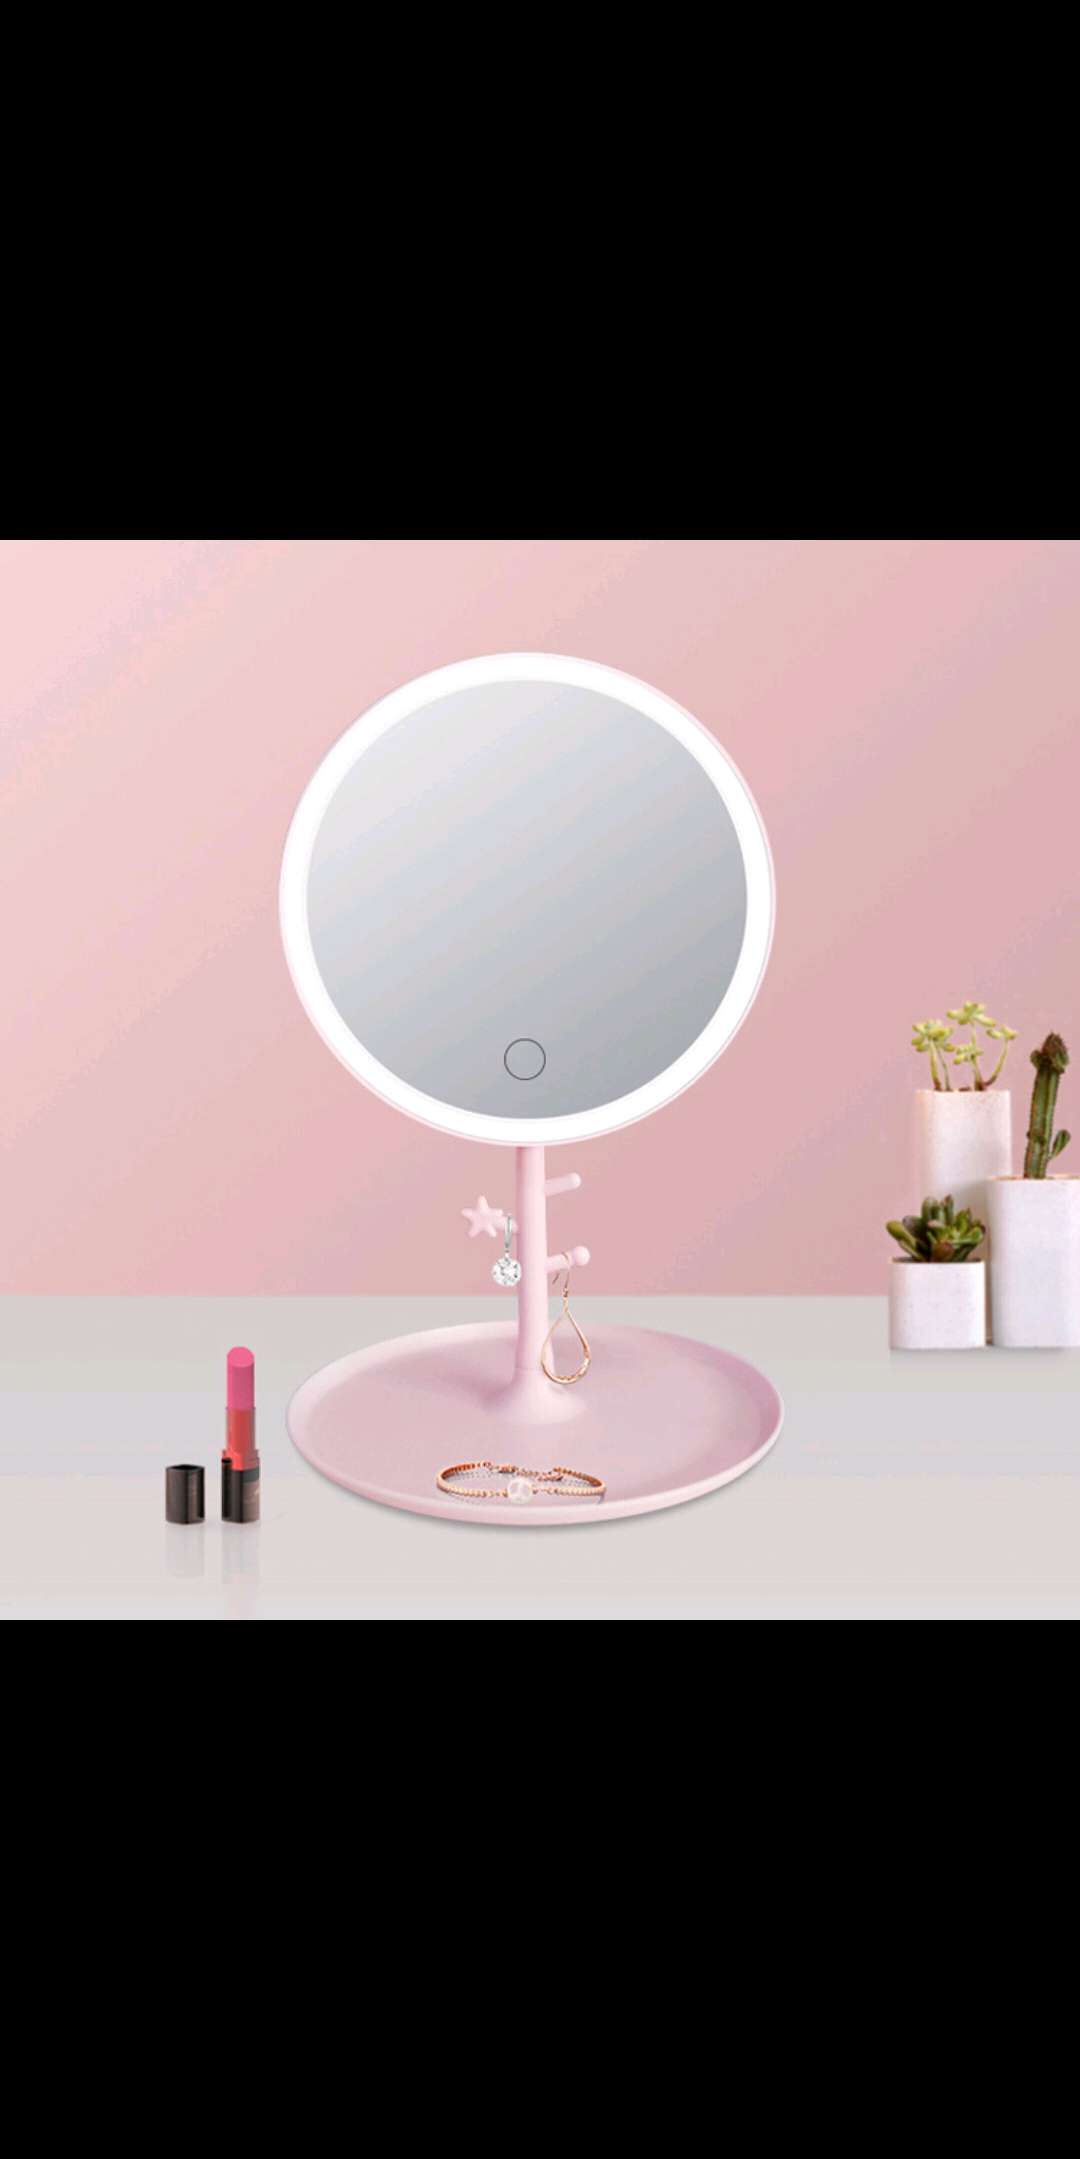 LED网红化妆镜补光美颜镜子灯宿舍桌面便携式可拆卸镜子产品图